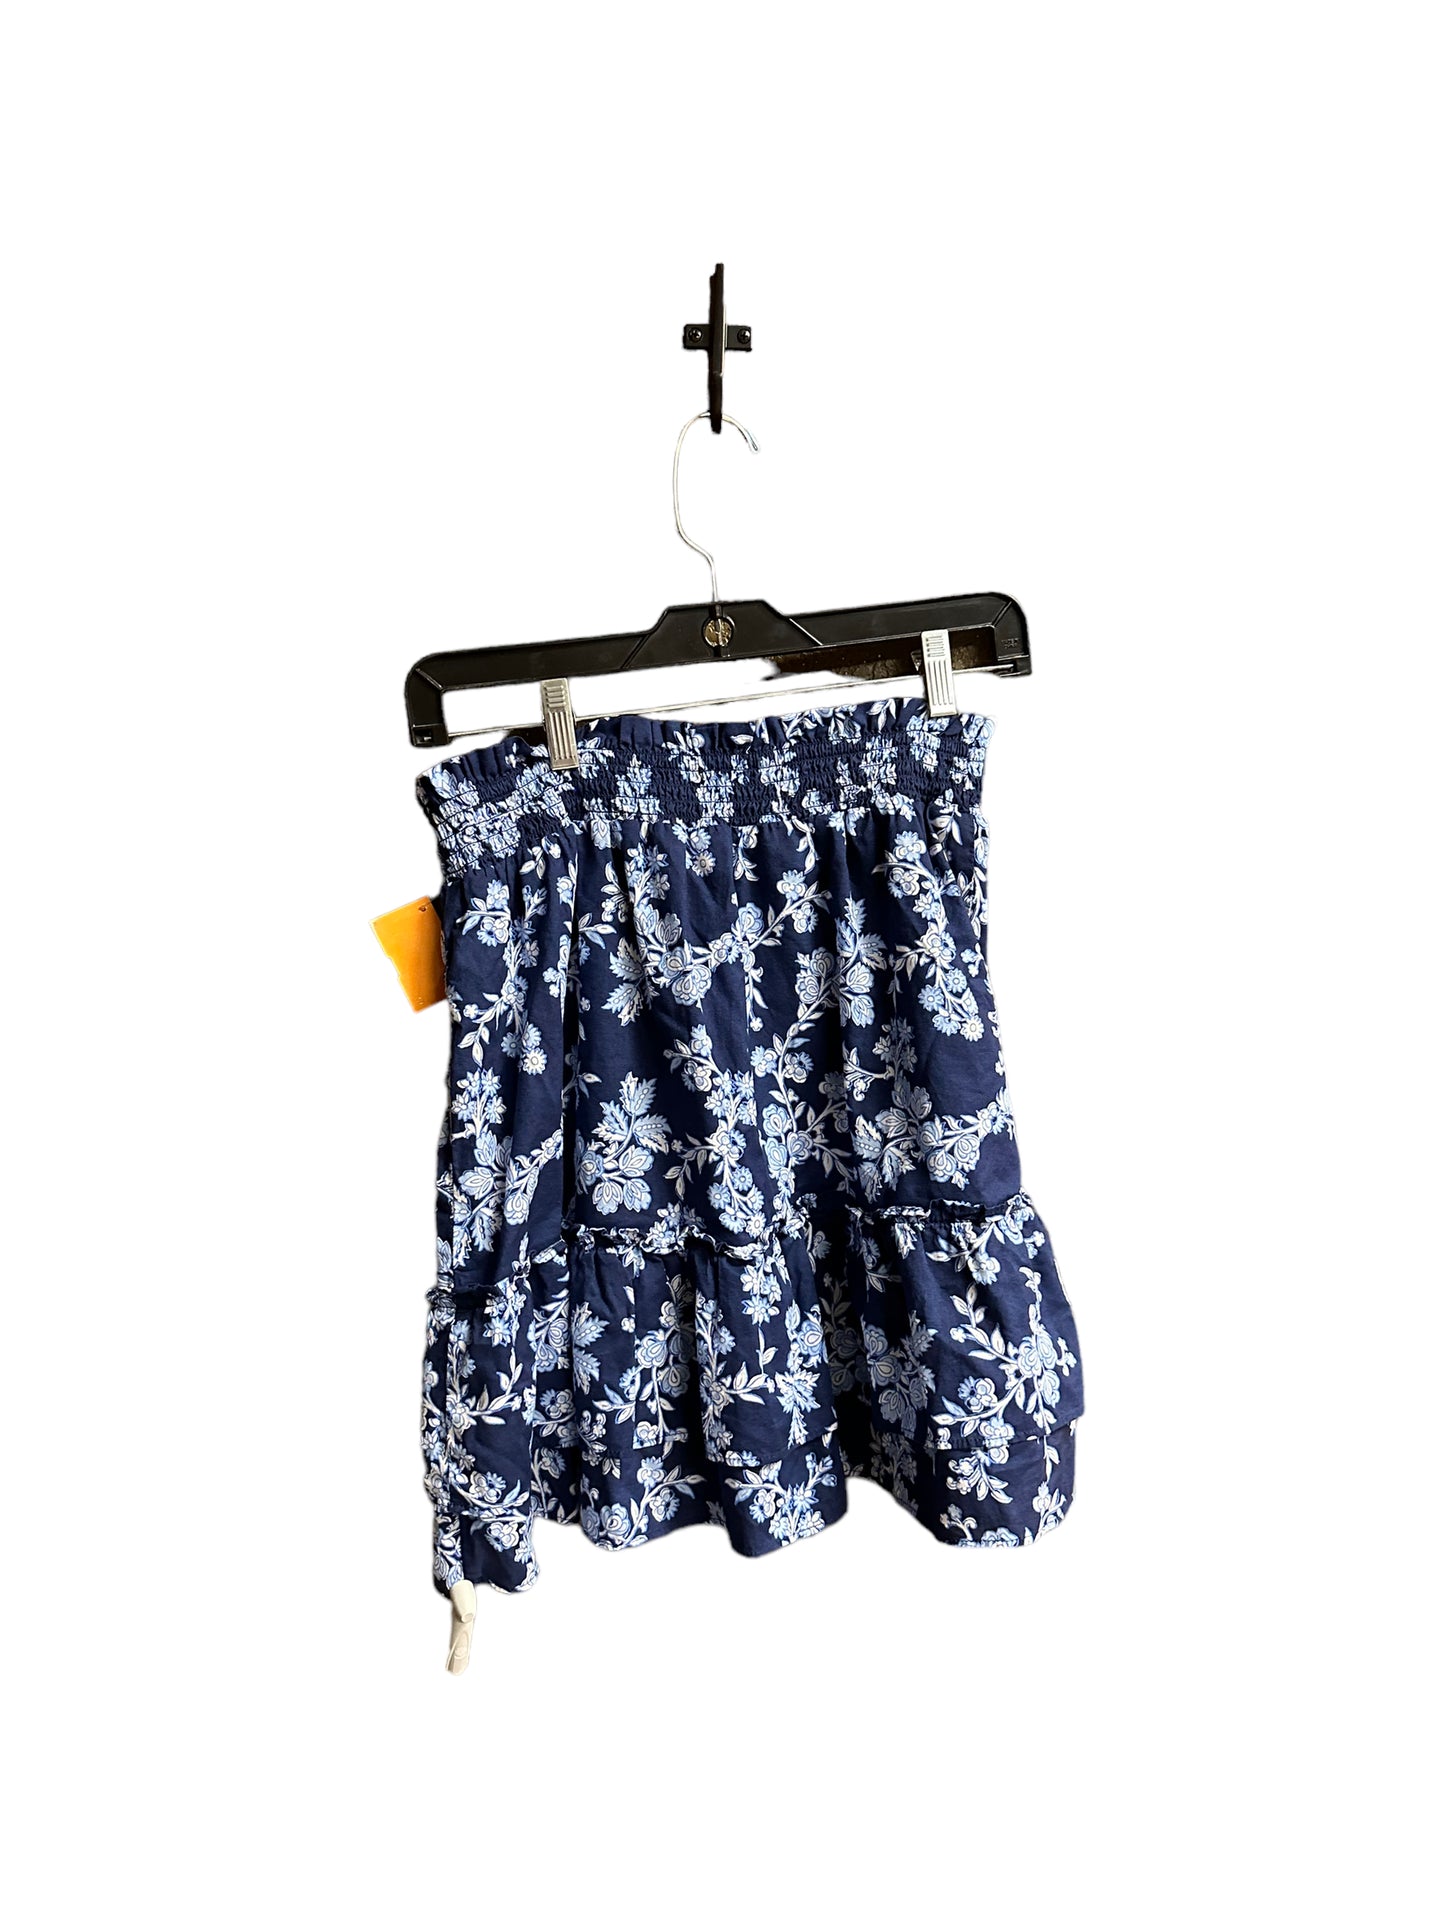 Skirt Mini & Short By J. Crew  Size: Xs